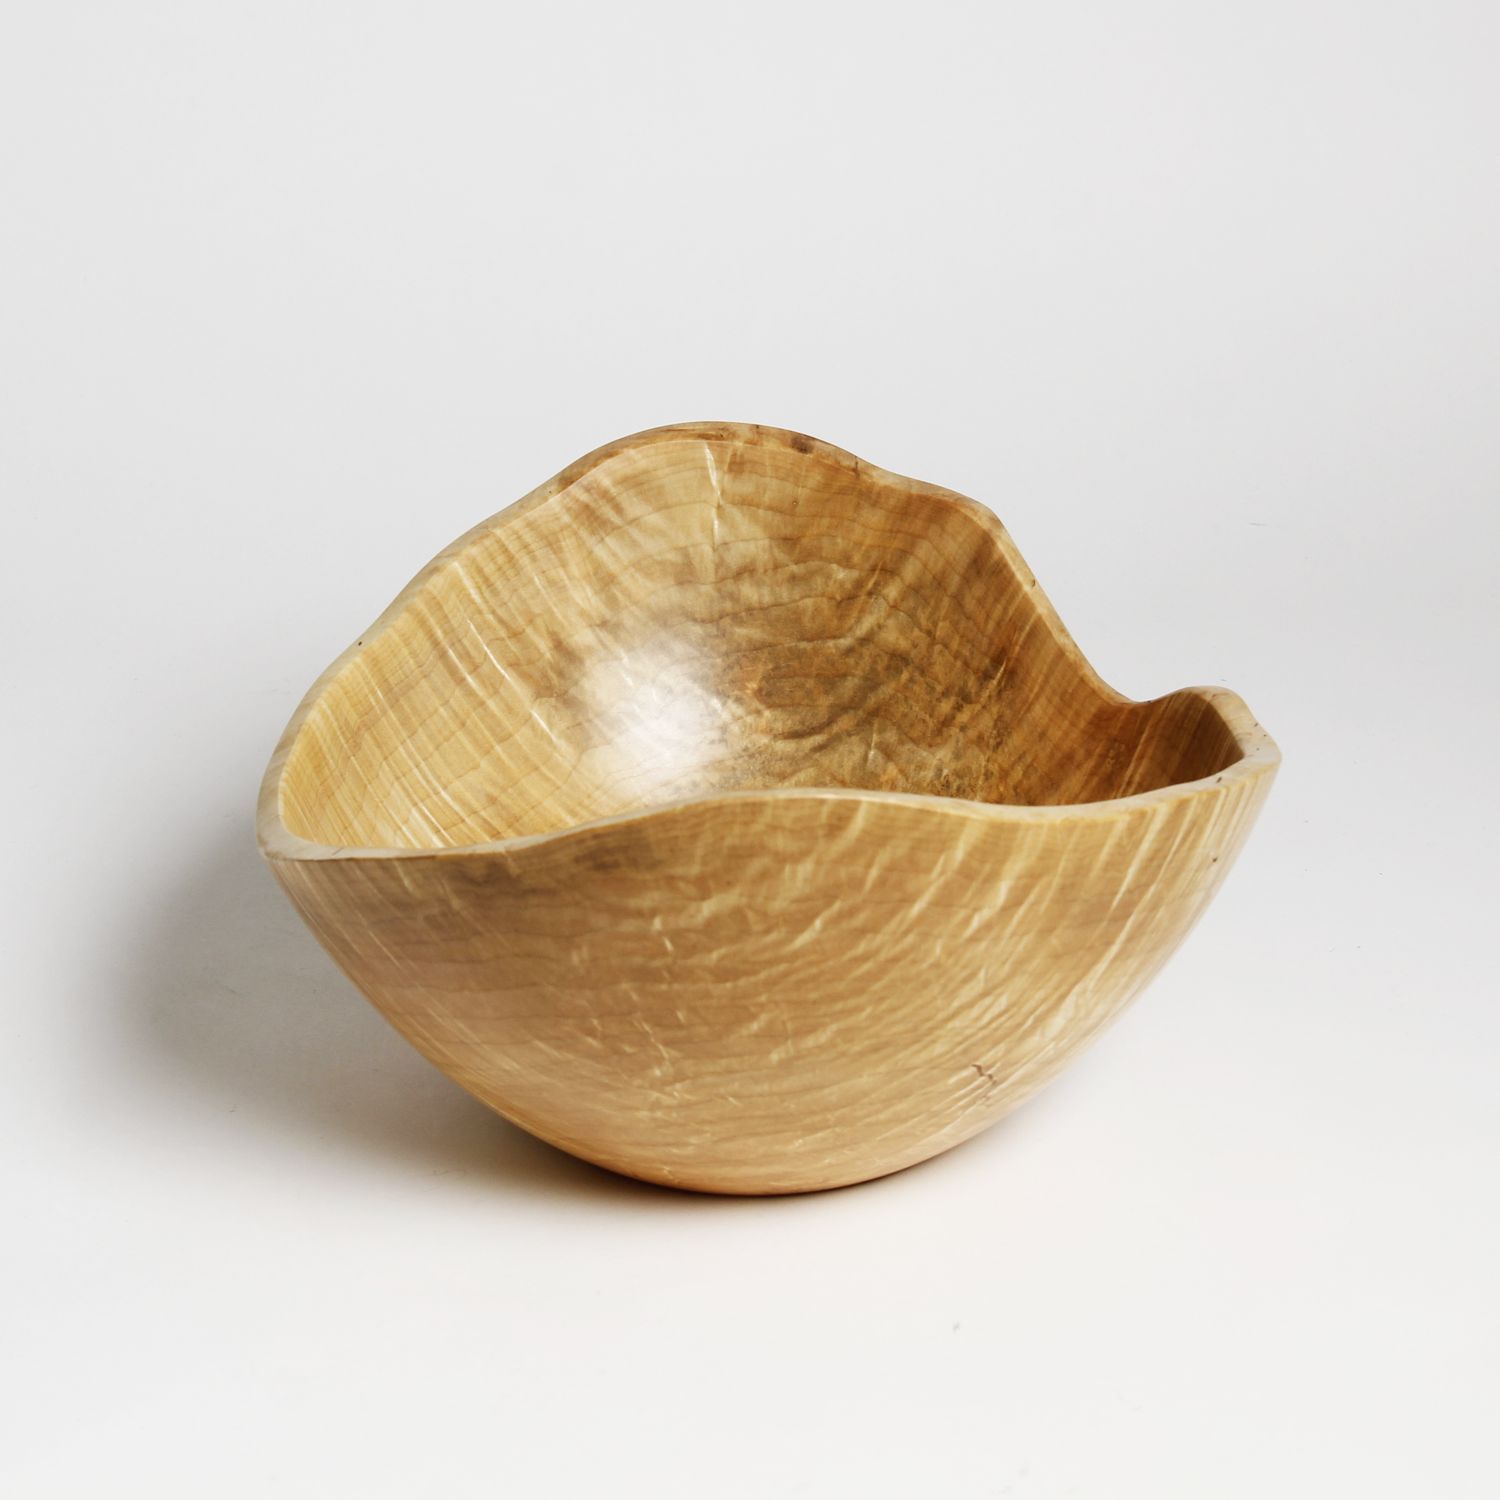 Michael Sbrocca: Bowl Maple Product Image 2 of 2